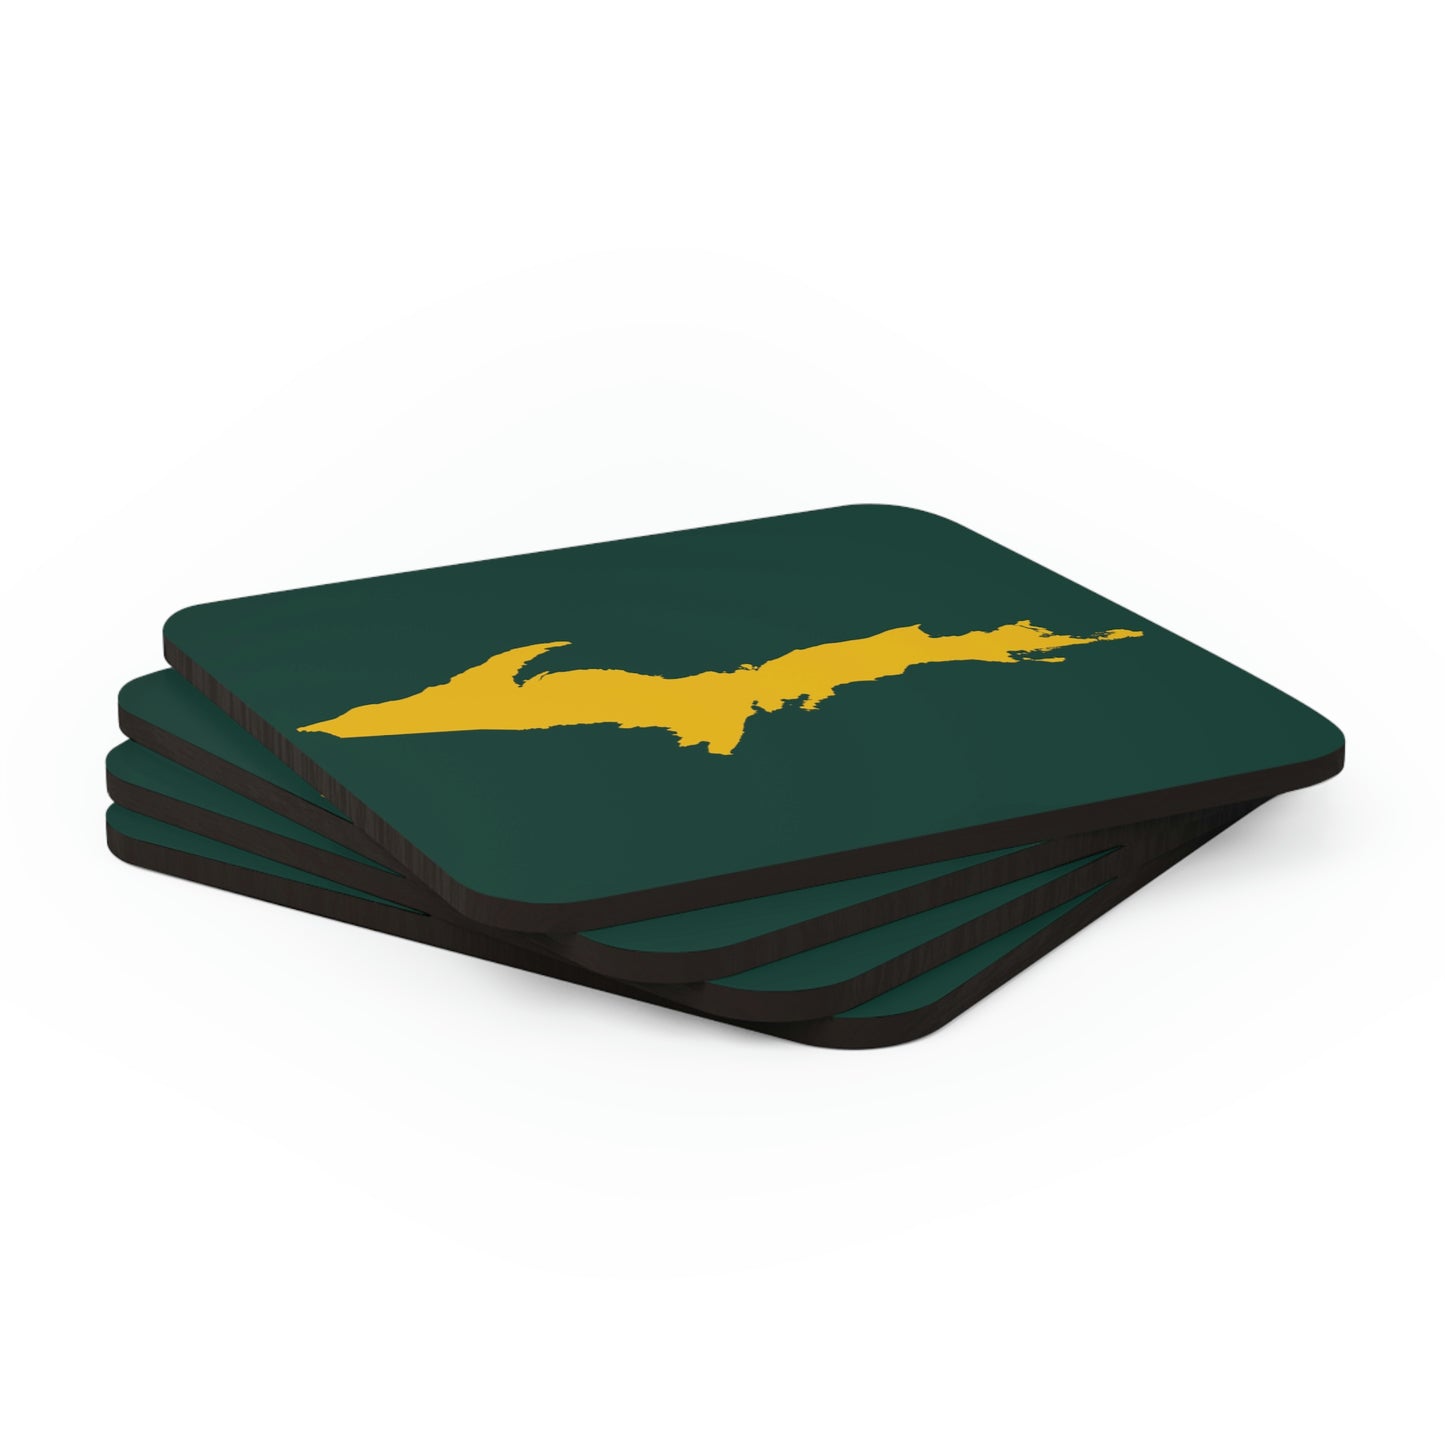 Michigan Upper Peninsula Coaster Set (Green w/ Gold UP Outline) | Corkwood - 4 pack